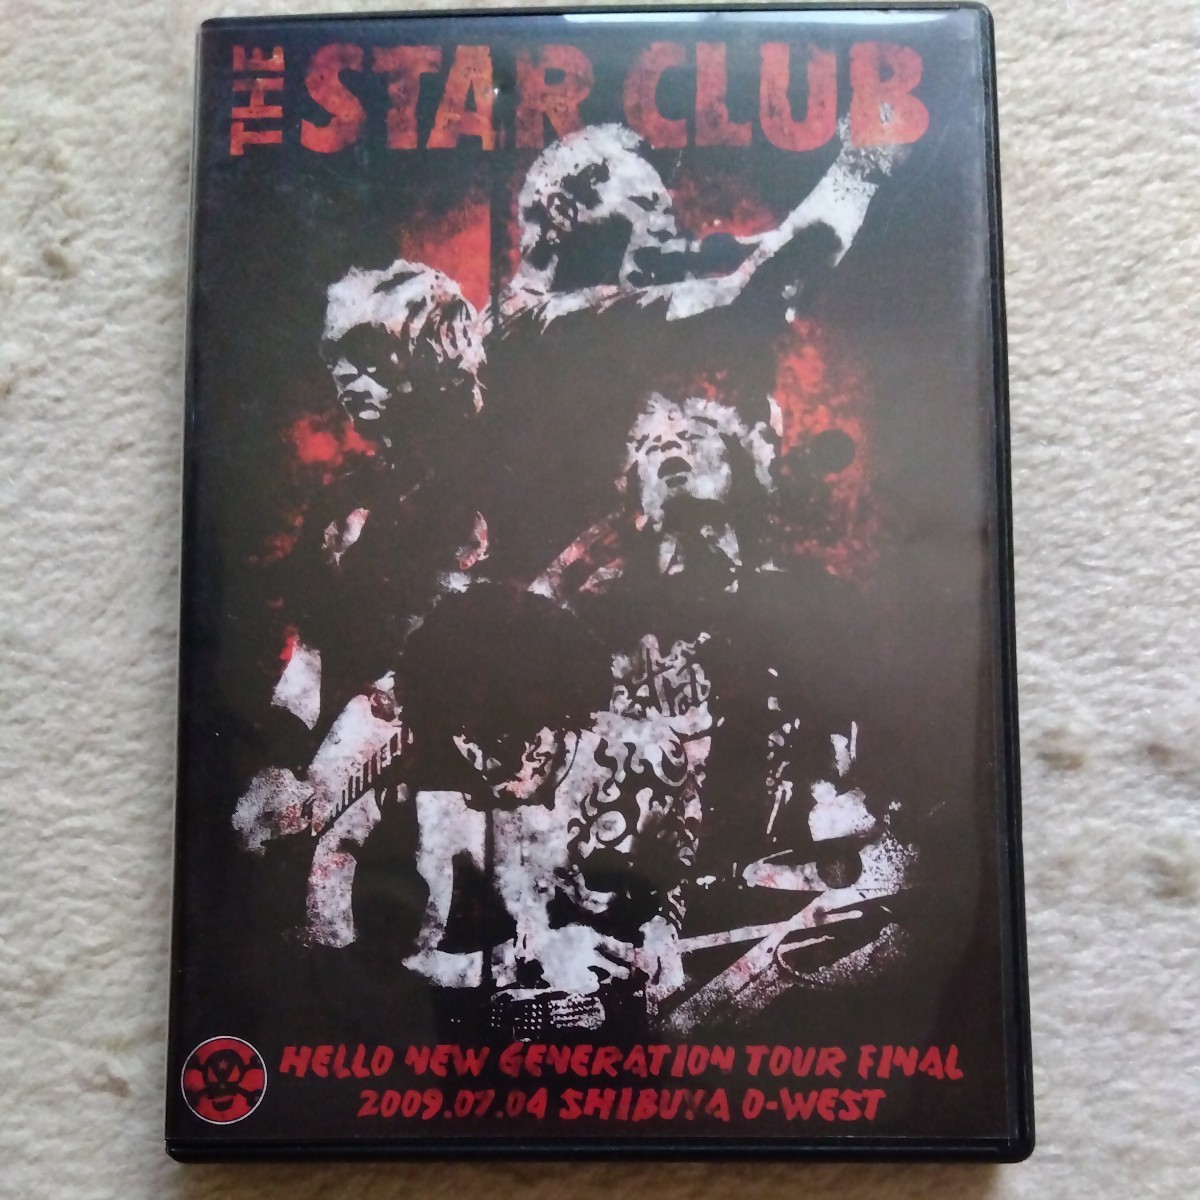 Yahoo!オークション -「the star club」(DVD) の落札相場・落札価格